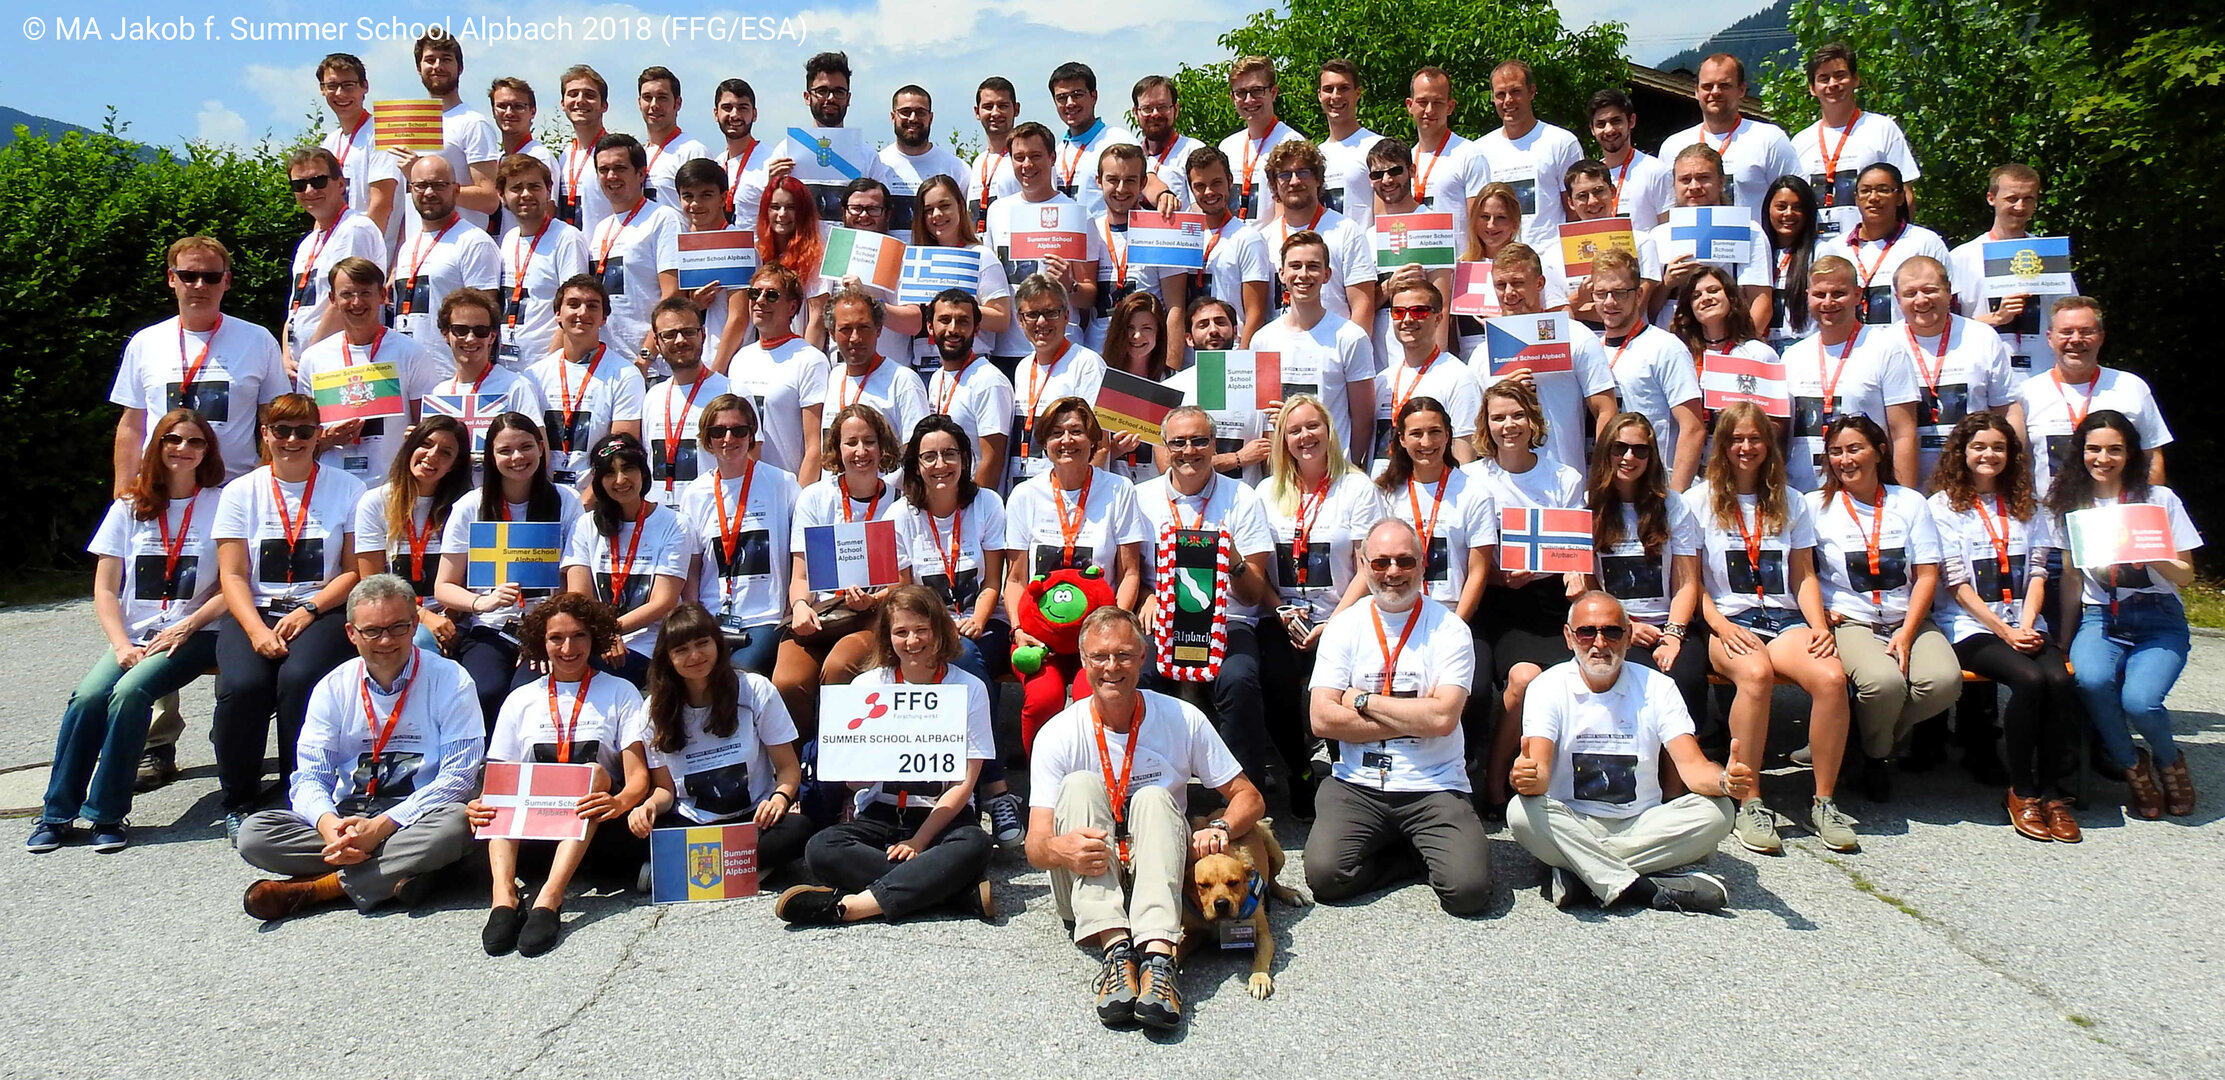 2018 Alpbach Summer School participants